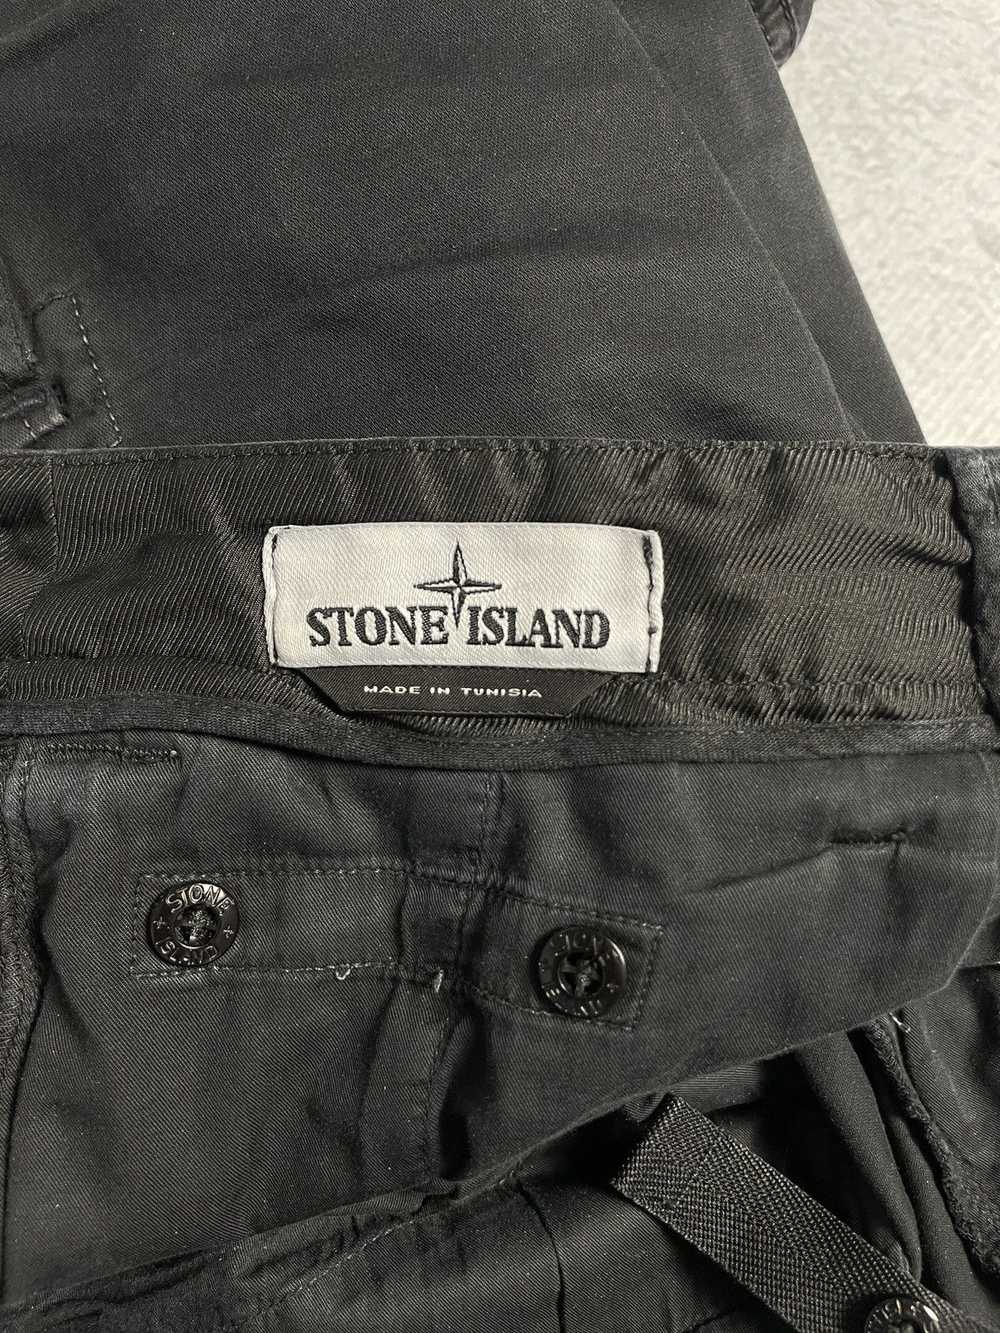 Stone Island Stone Island Black Slim Cargo Pants - image 5